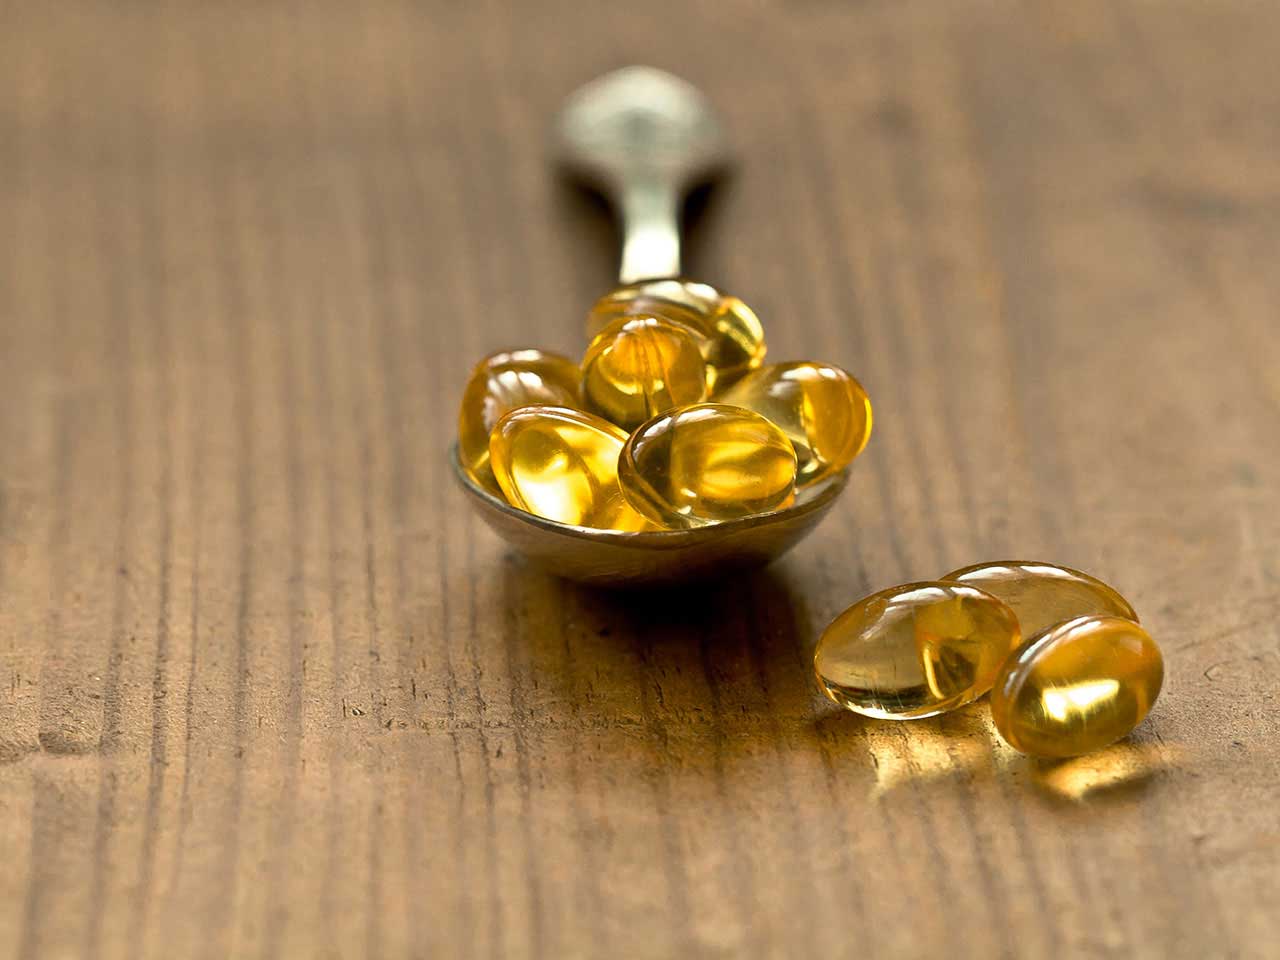 Fish oil capsules for vitamin D